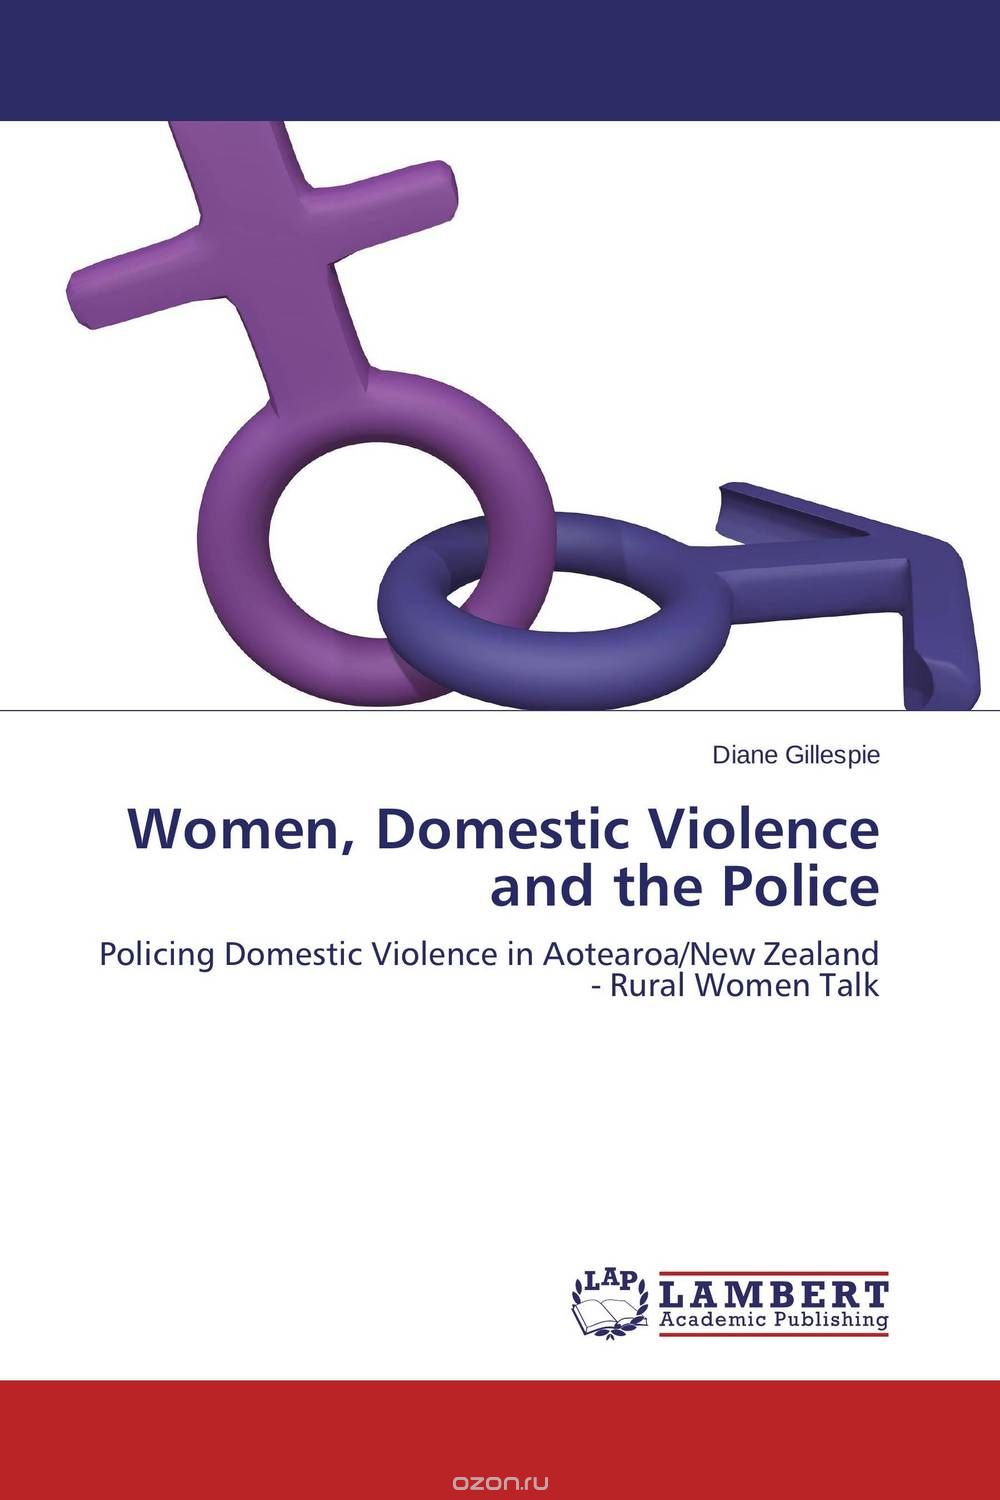 Скачать книгу "Women, Domestic Violence and the Police"